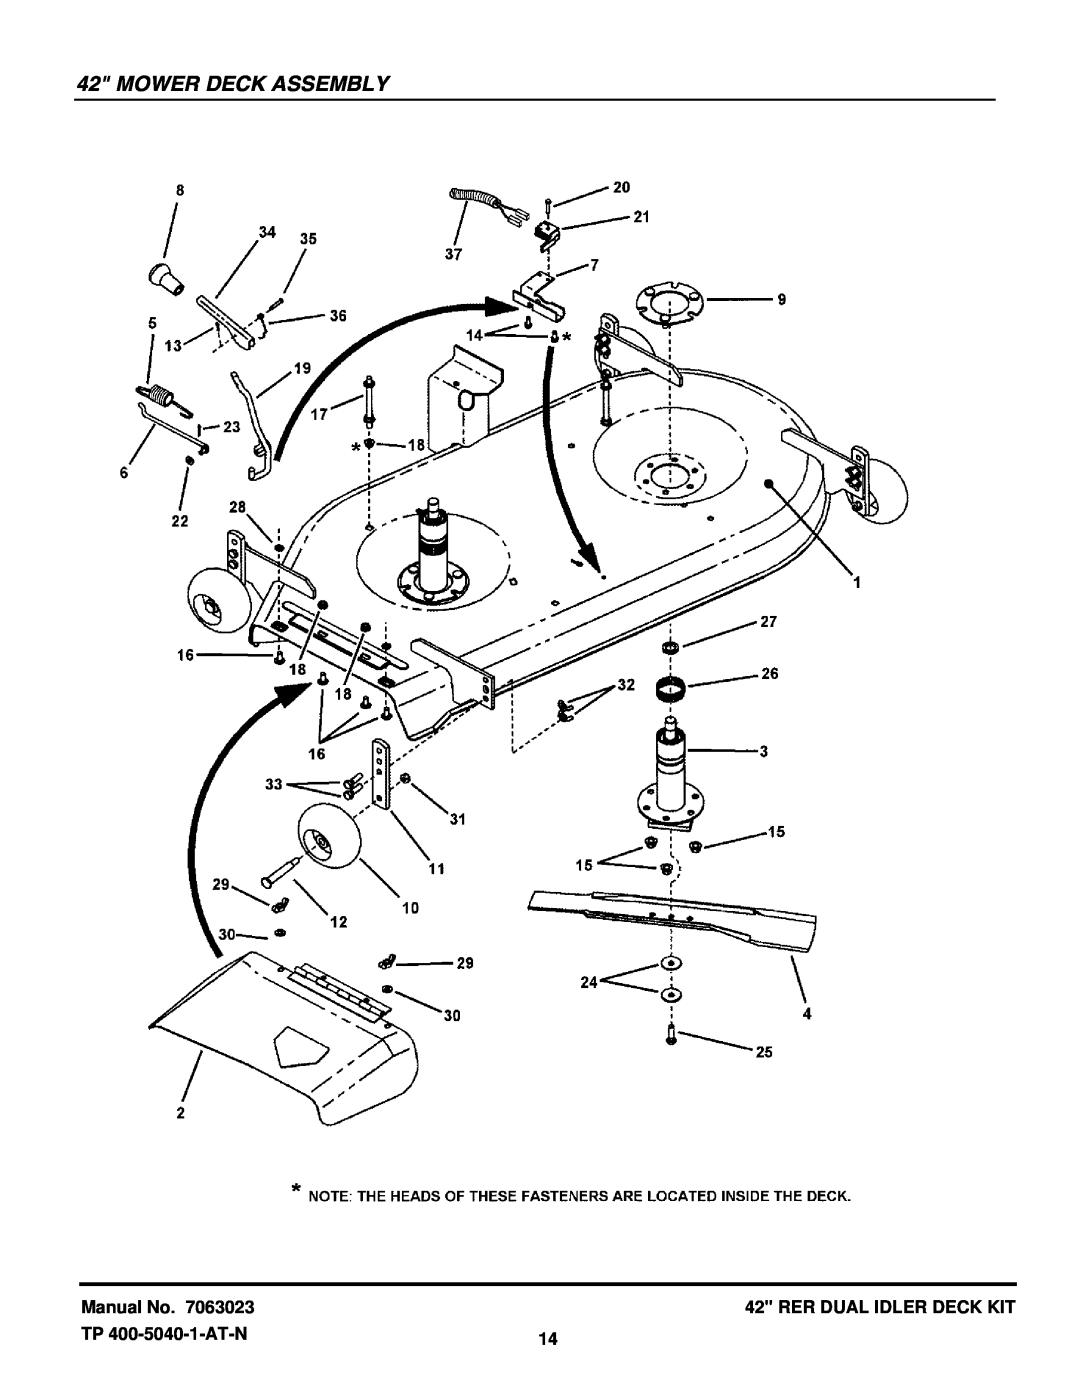 Snapper 7063023 manual Mower Deck Assembly, Manual No, Rer Dual Idler Deck Kit, TP 400-5040-1-AT-N 